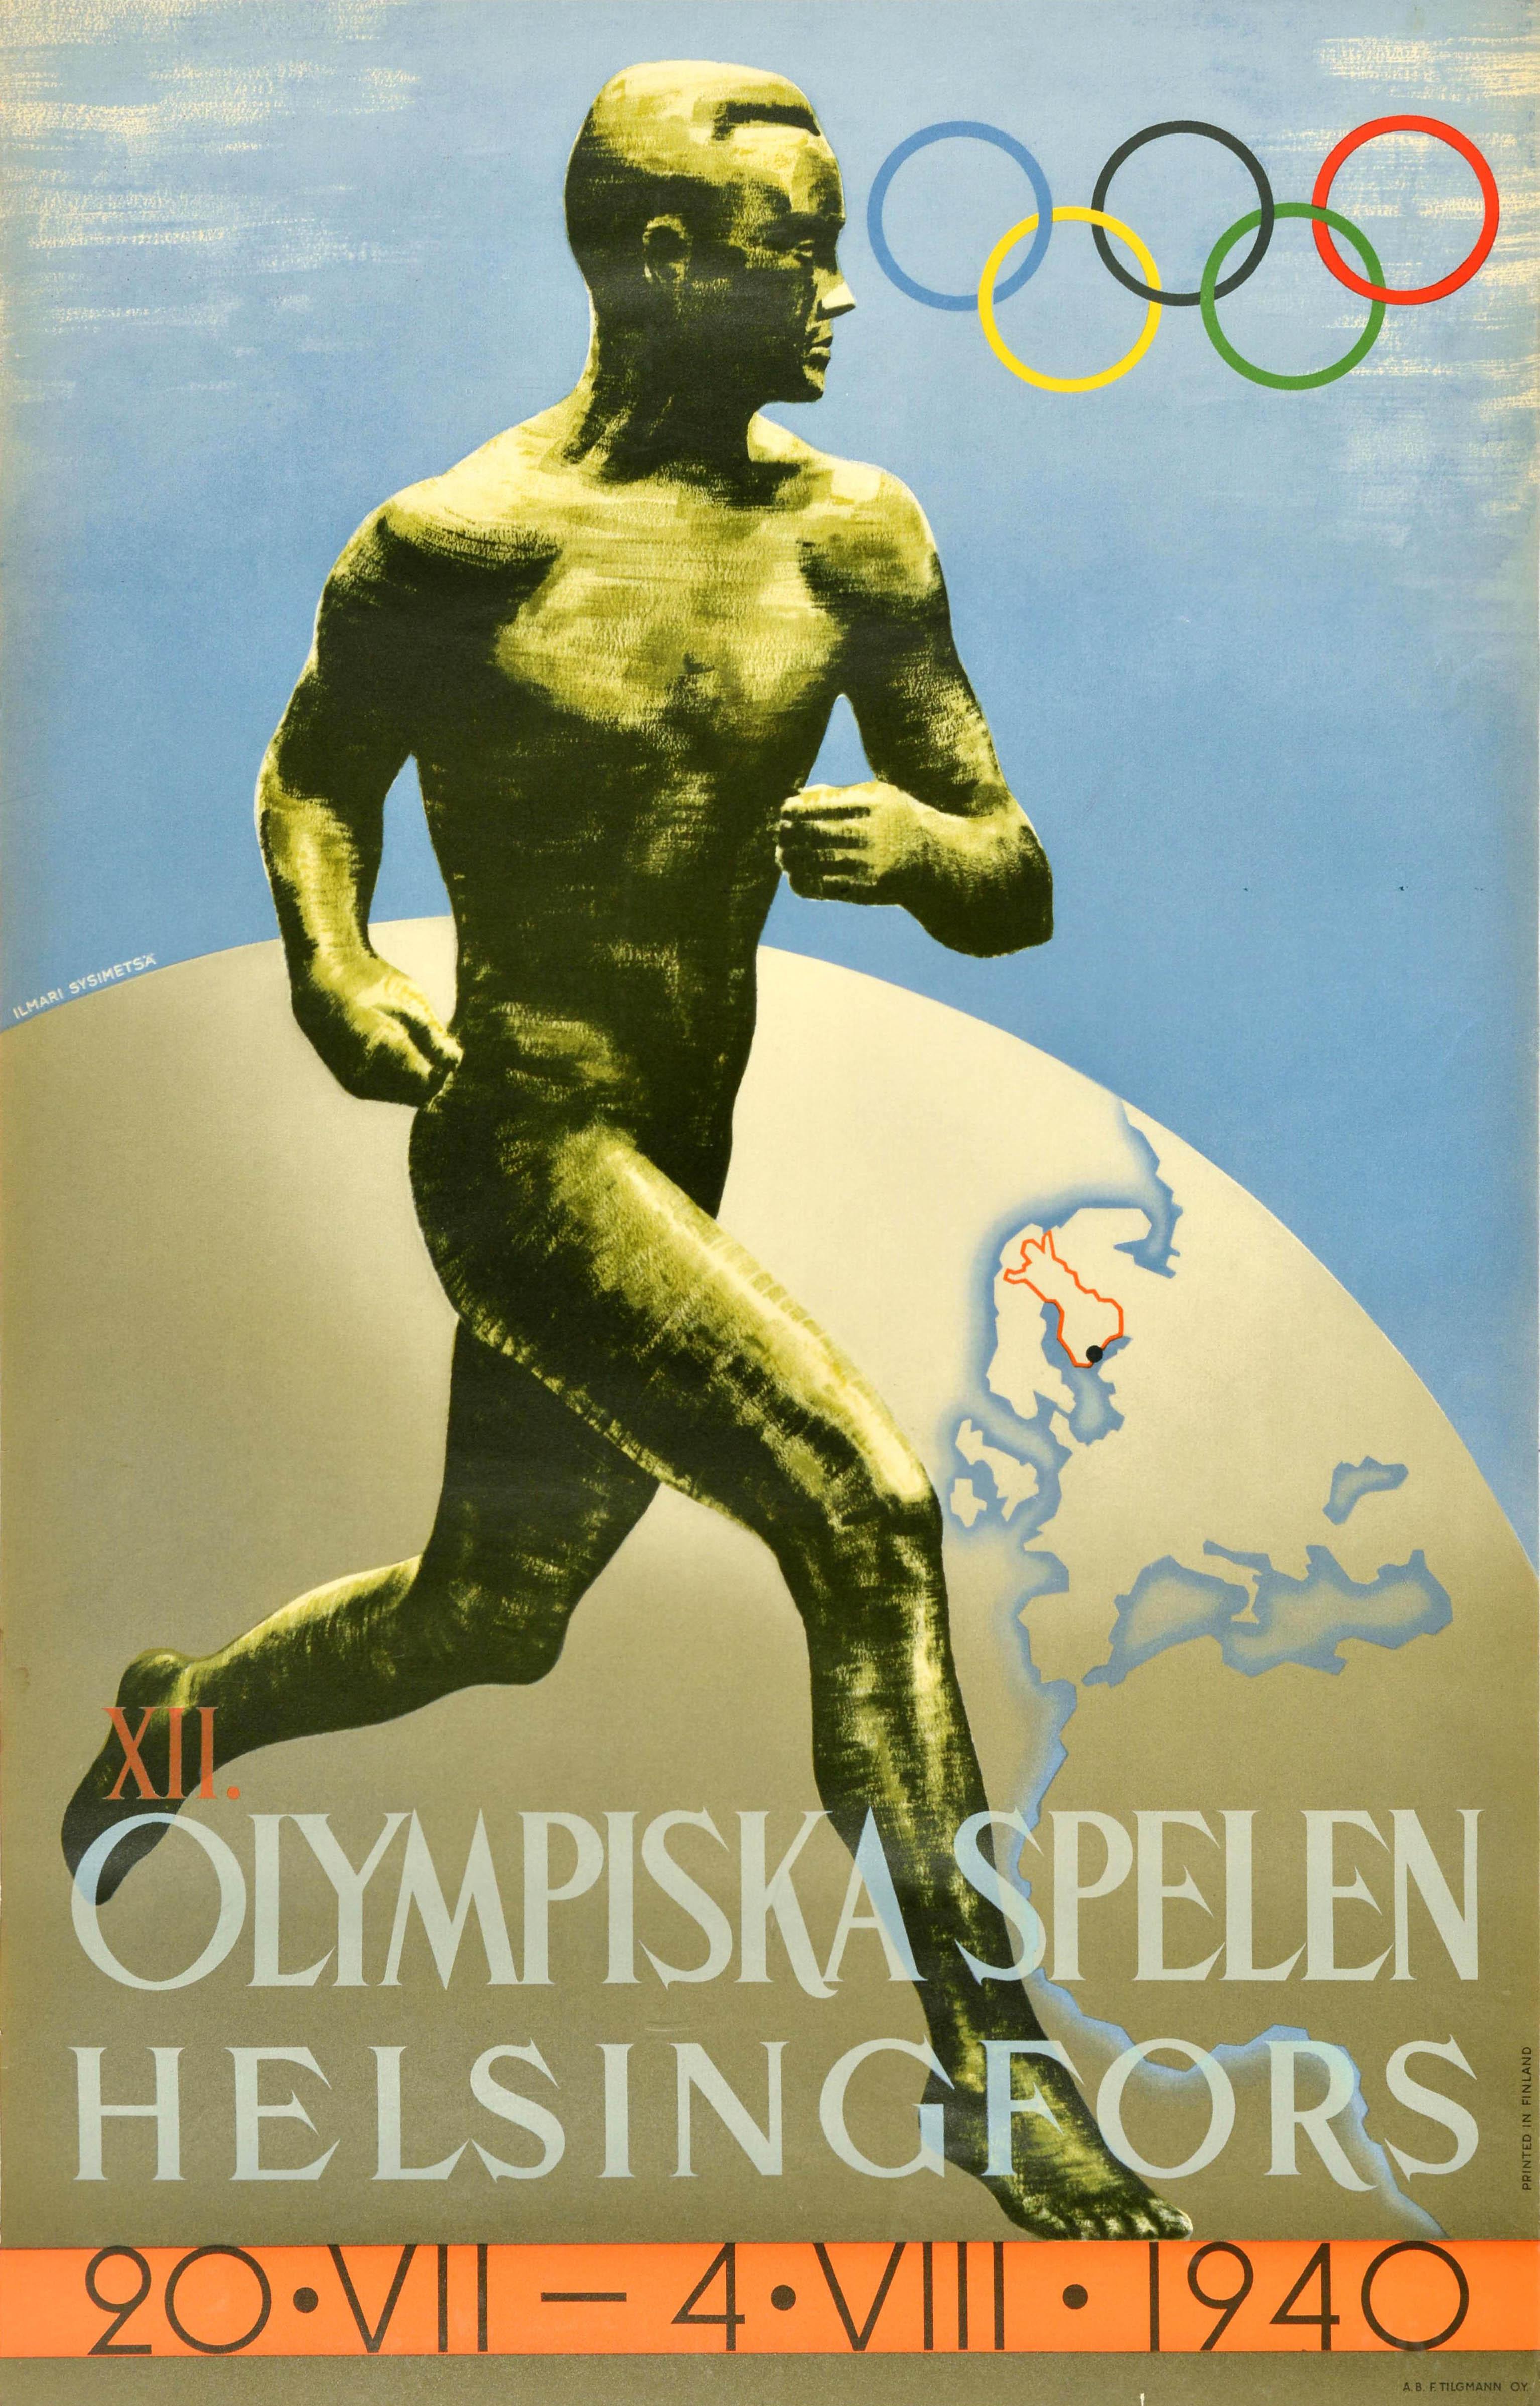 Ilmari Sysimetsa Print - Original Vintage Sports Poster Olympic Games Helsinki 1940 Finland Athlete